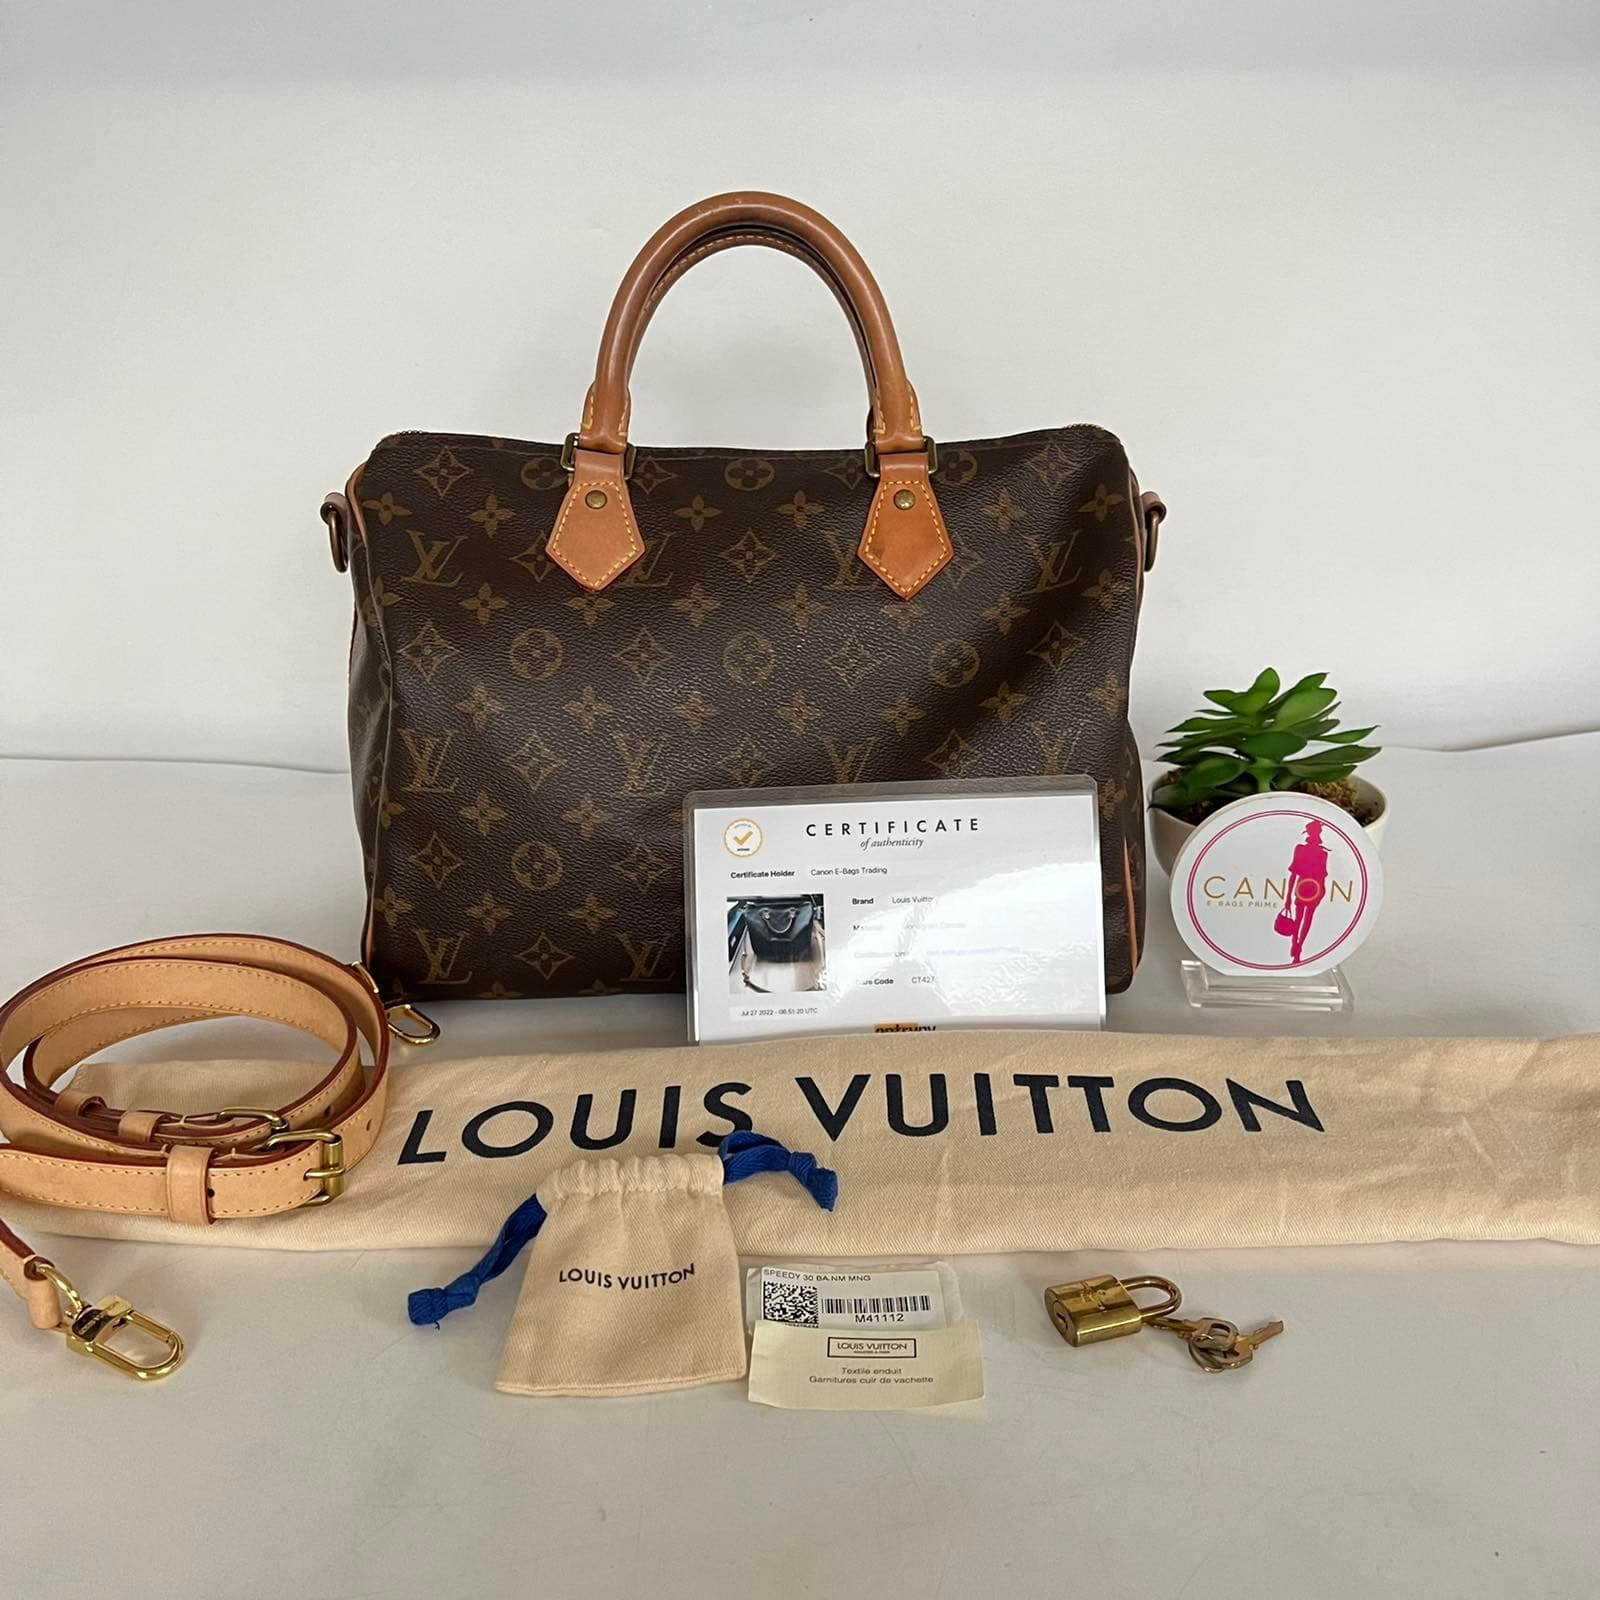 Louis Vuitton Speedy Bandoulière 25 in Monogram Vachette - New - SOLD